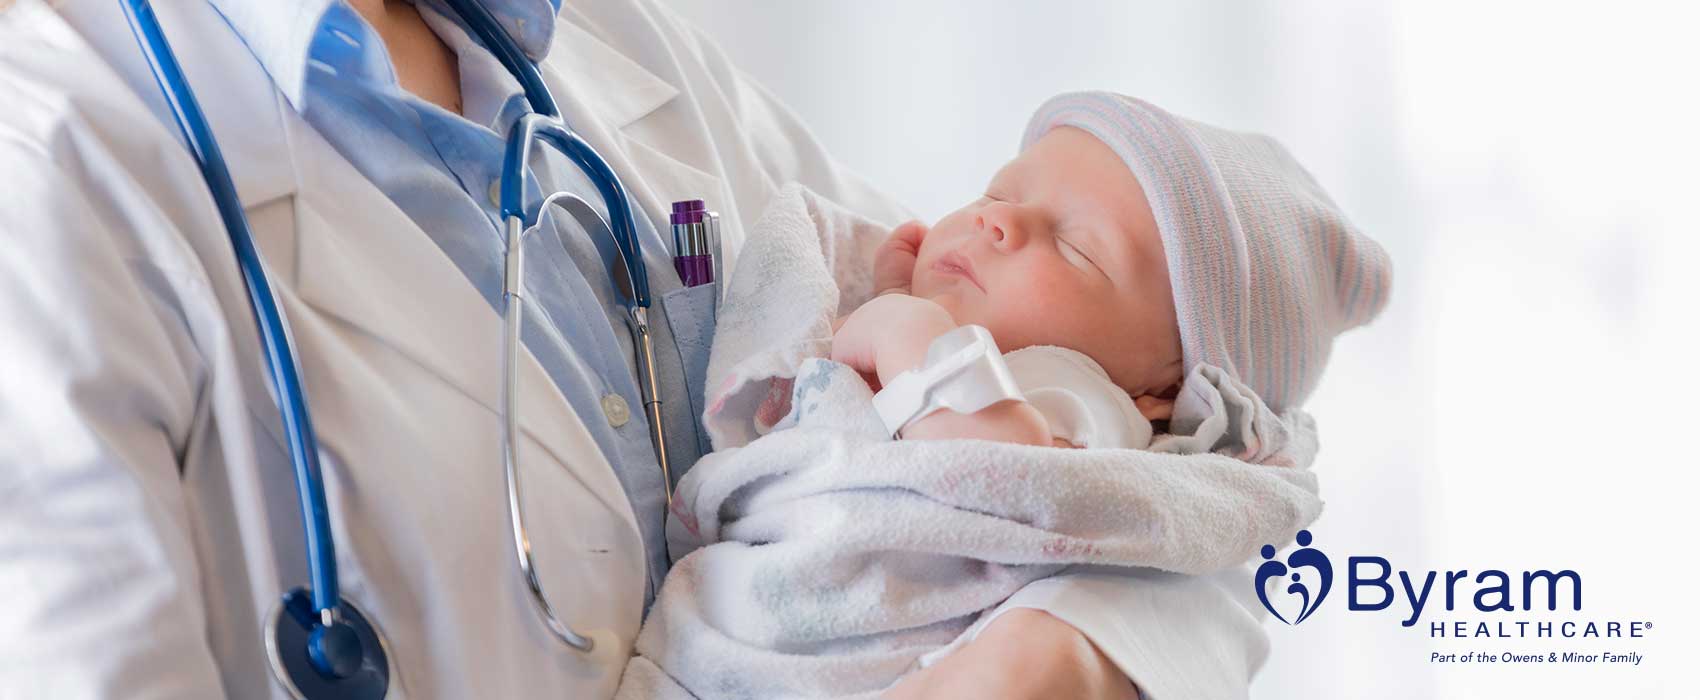 Doctor holding a newborn.